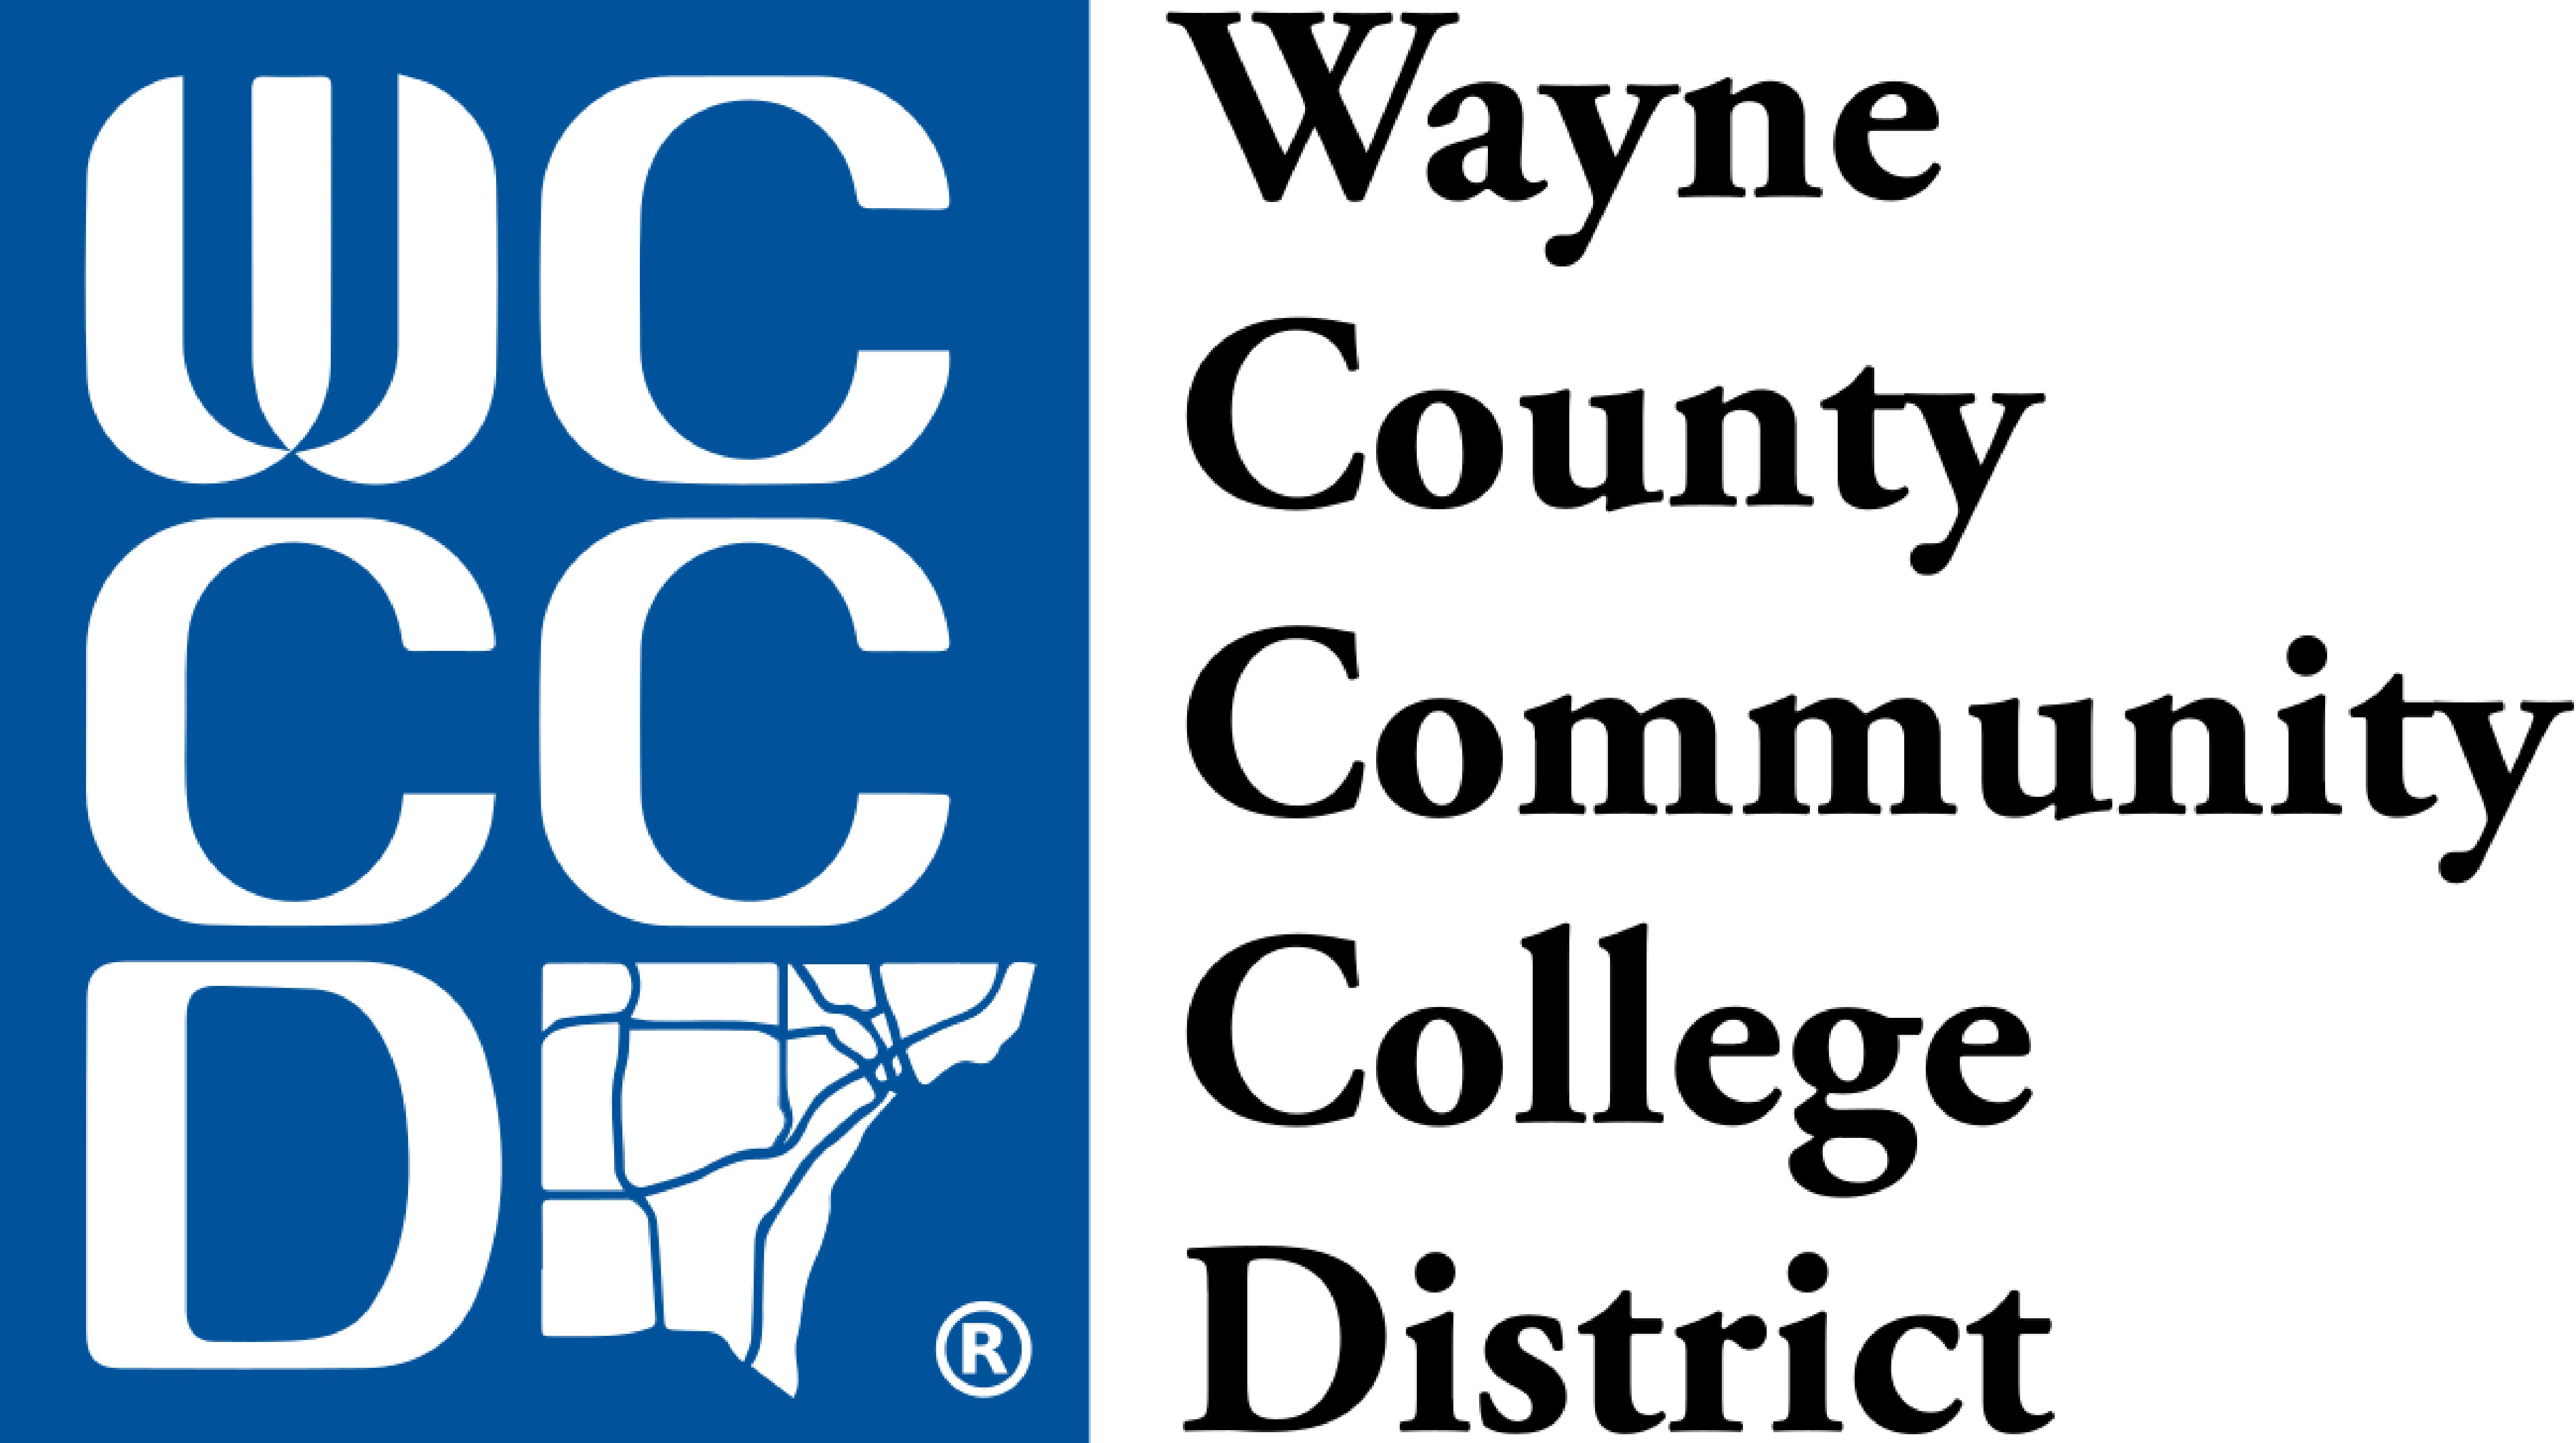 Wayne County Community College District logo.